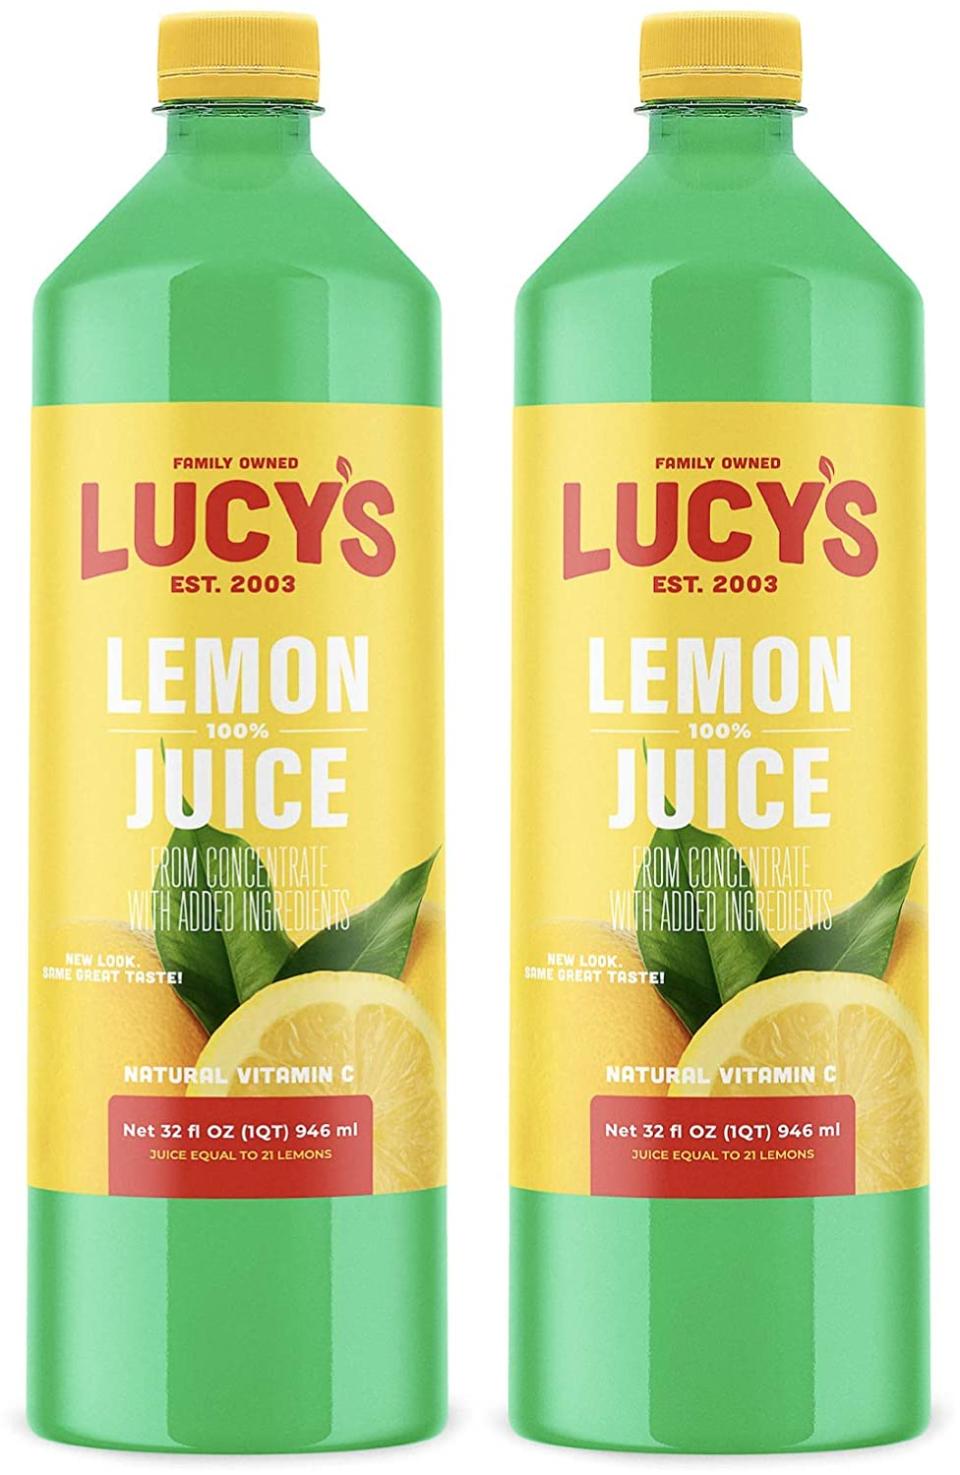 bleach alternative lucys lemon juice